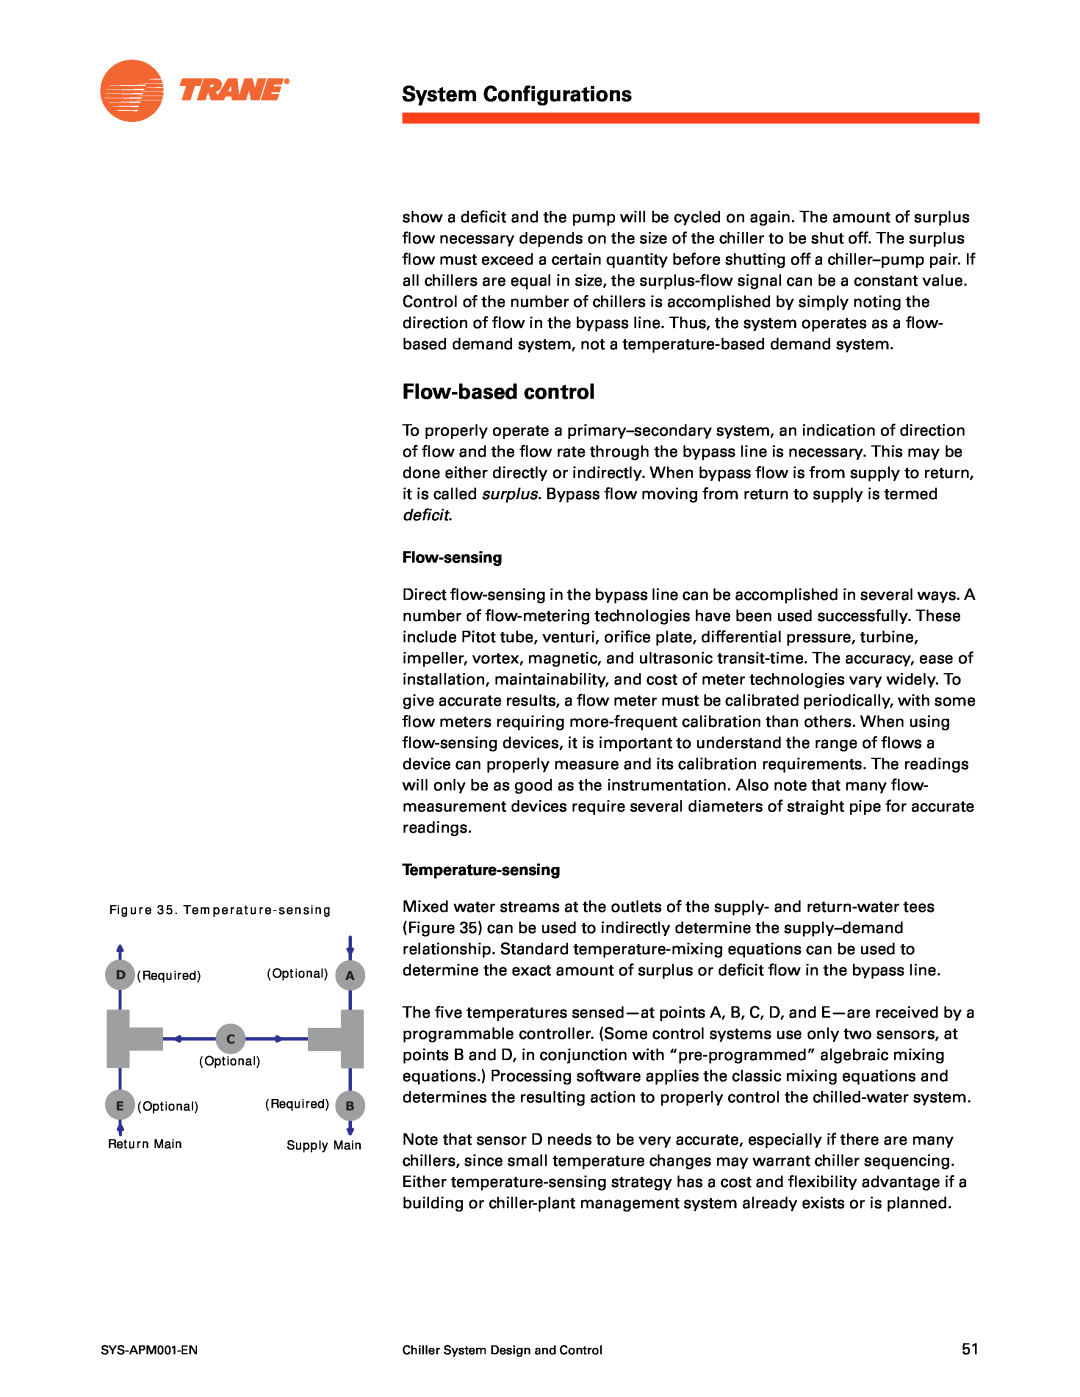 Trane SYS-APM001-EN manual Flow-based control, System Configurations, Flow-sensing, Temperature-sensing 